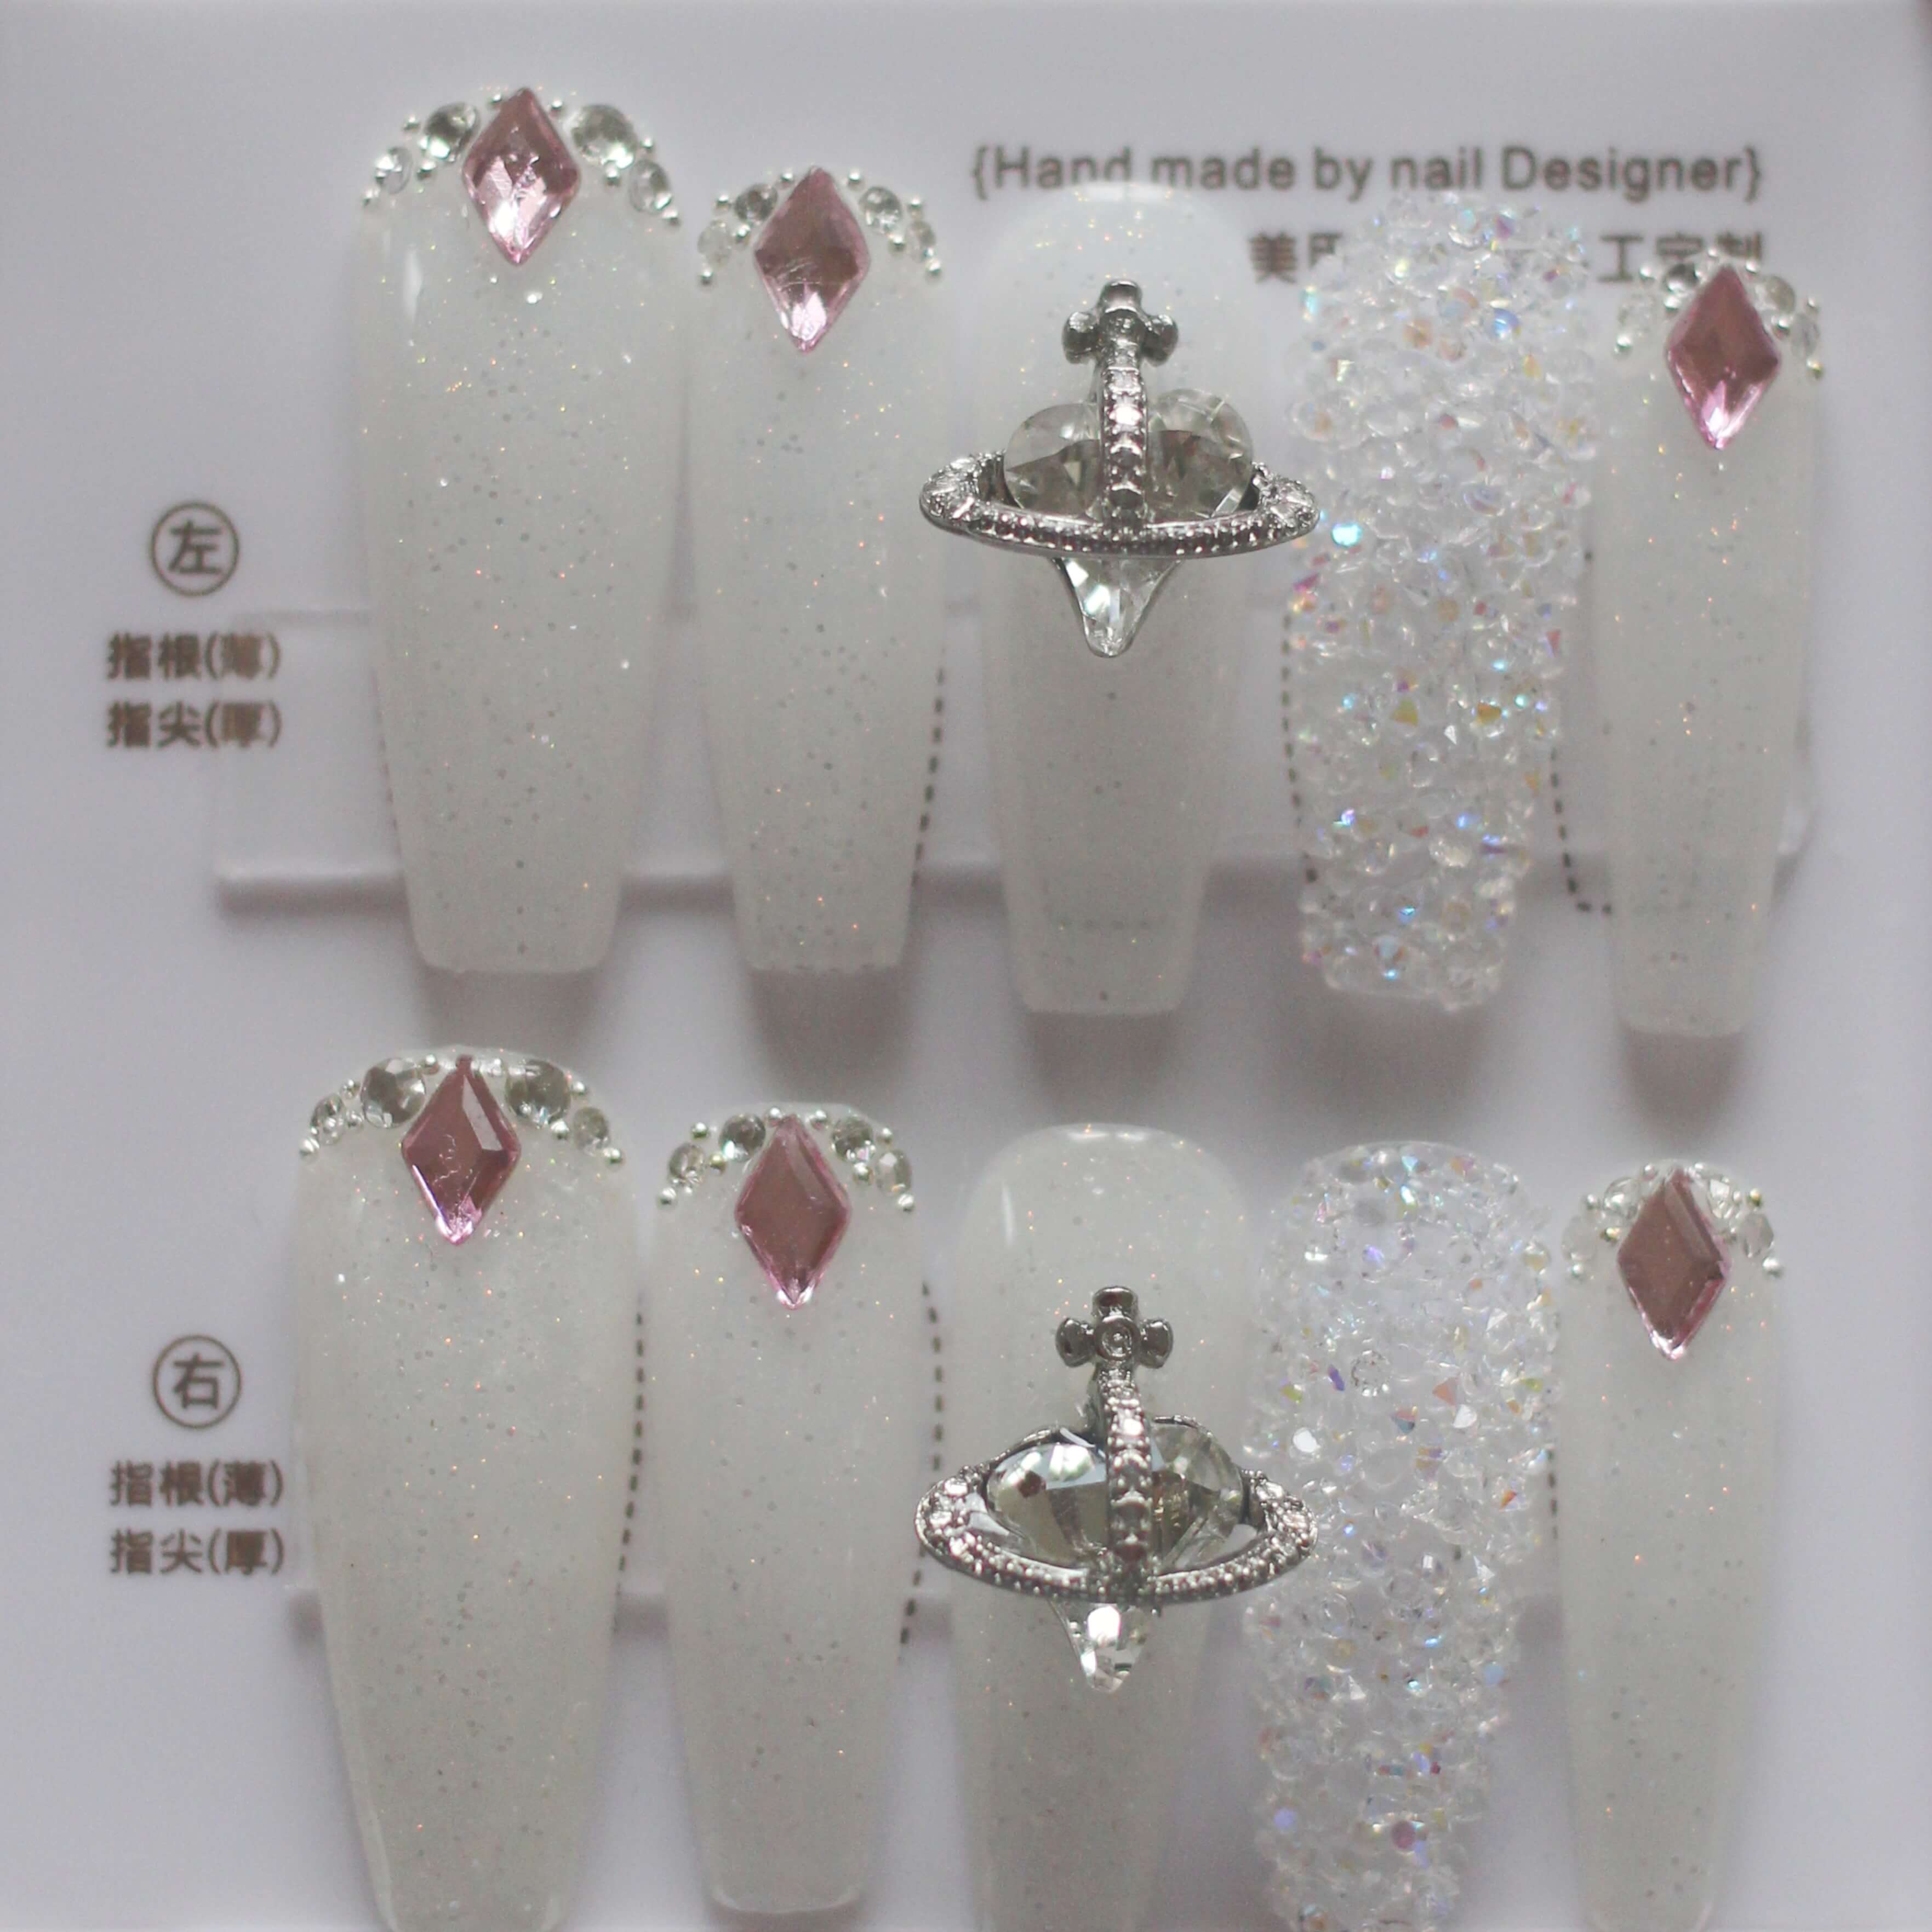 Vibeficant Progel White Glitter Handmade Gel Press on Nails Medium Coffin French Tip with 3D Heart Design